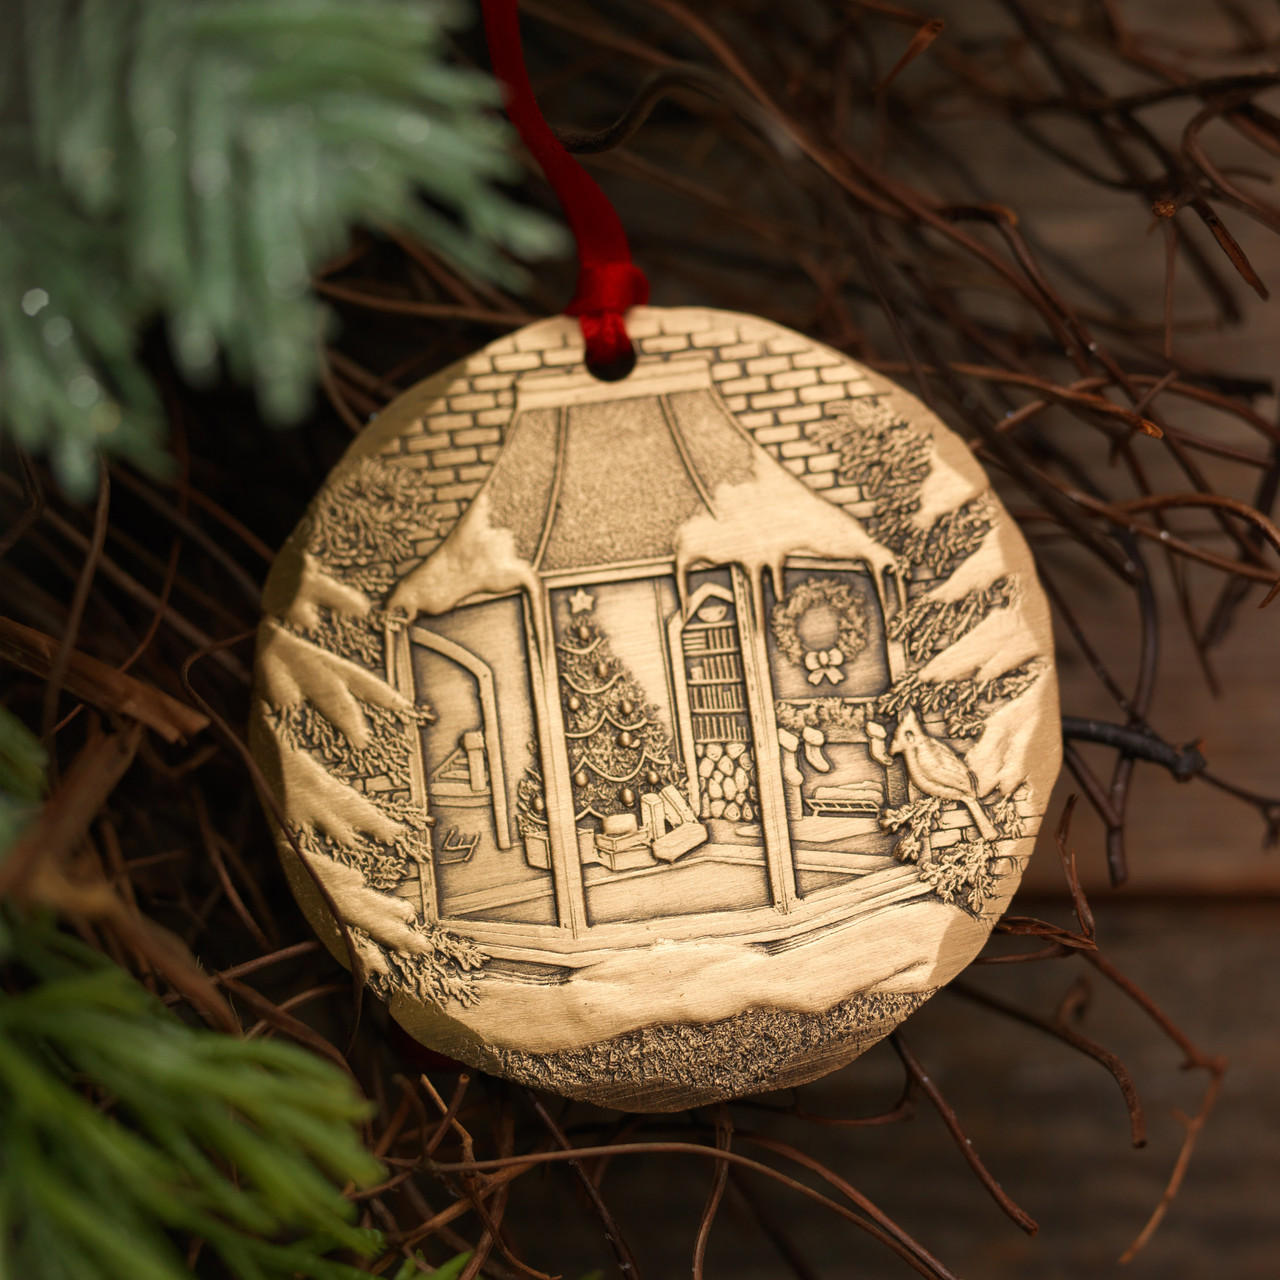 Personalized Christmas Grandma's Favorite Gifts Circle Ornament - Vikings  Warehouse